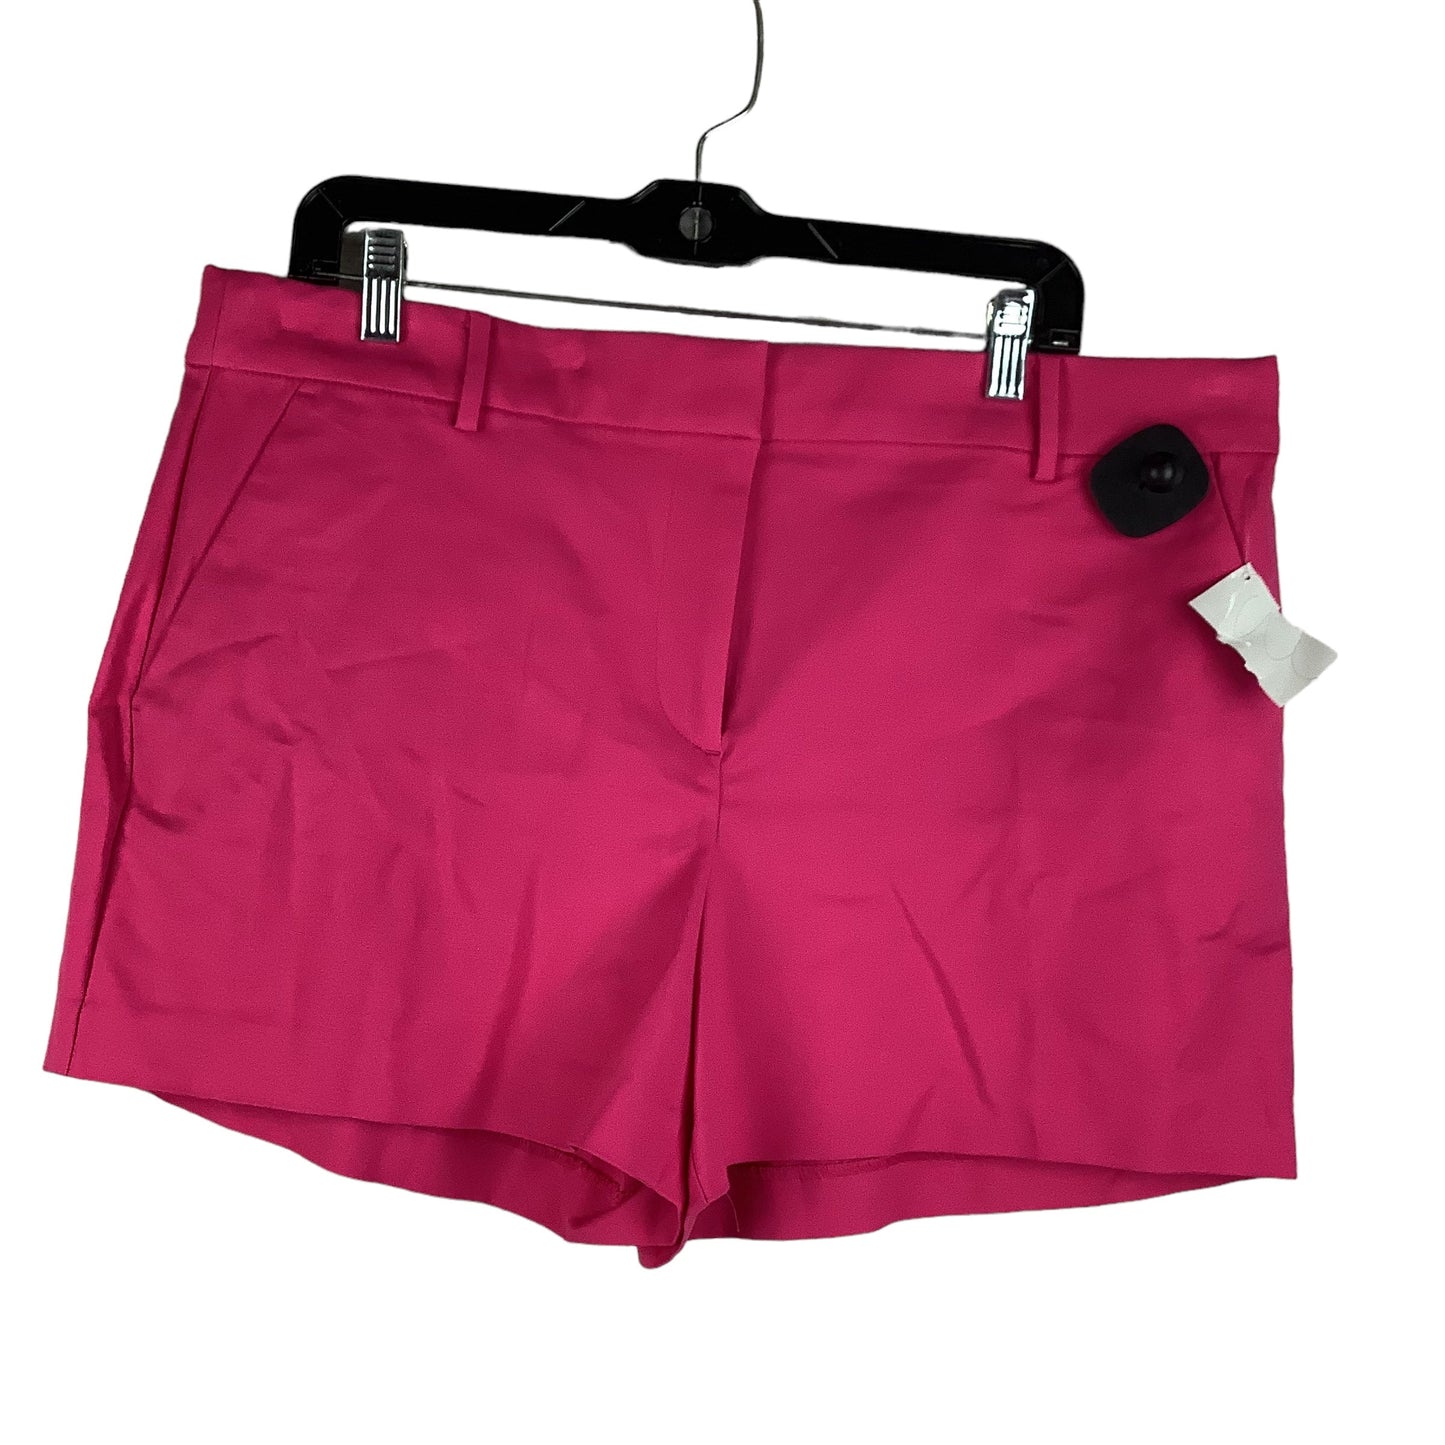 Pink Shorts Loft, Size 14